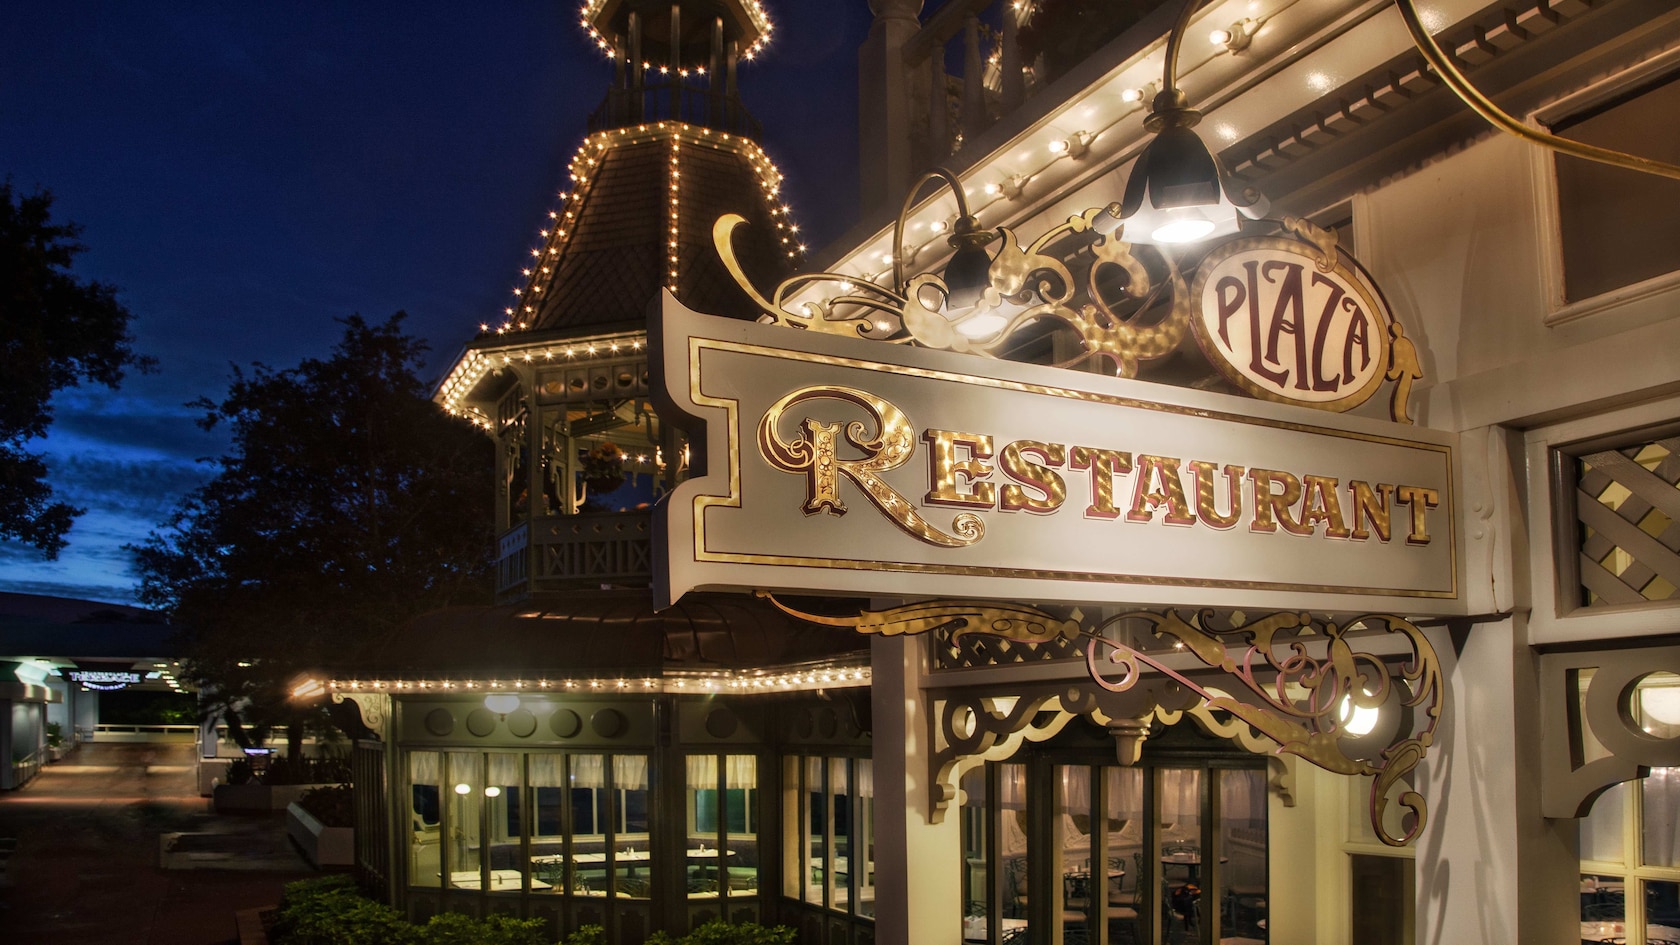 best restaurants disney world magic kingdom